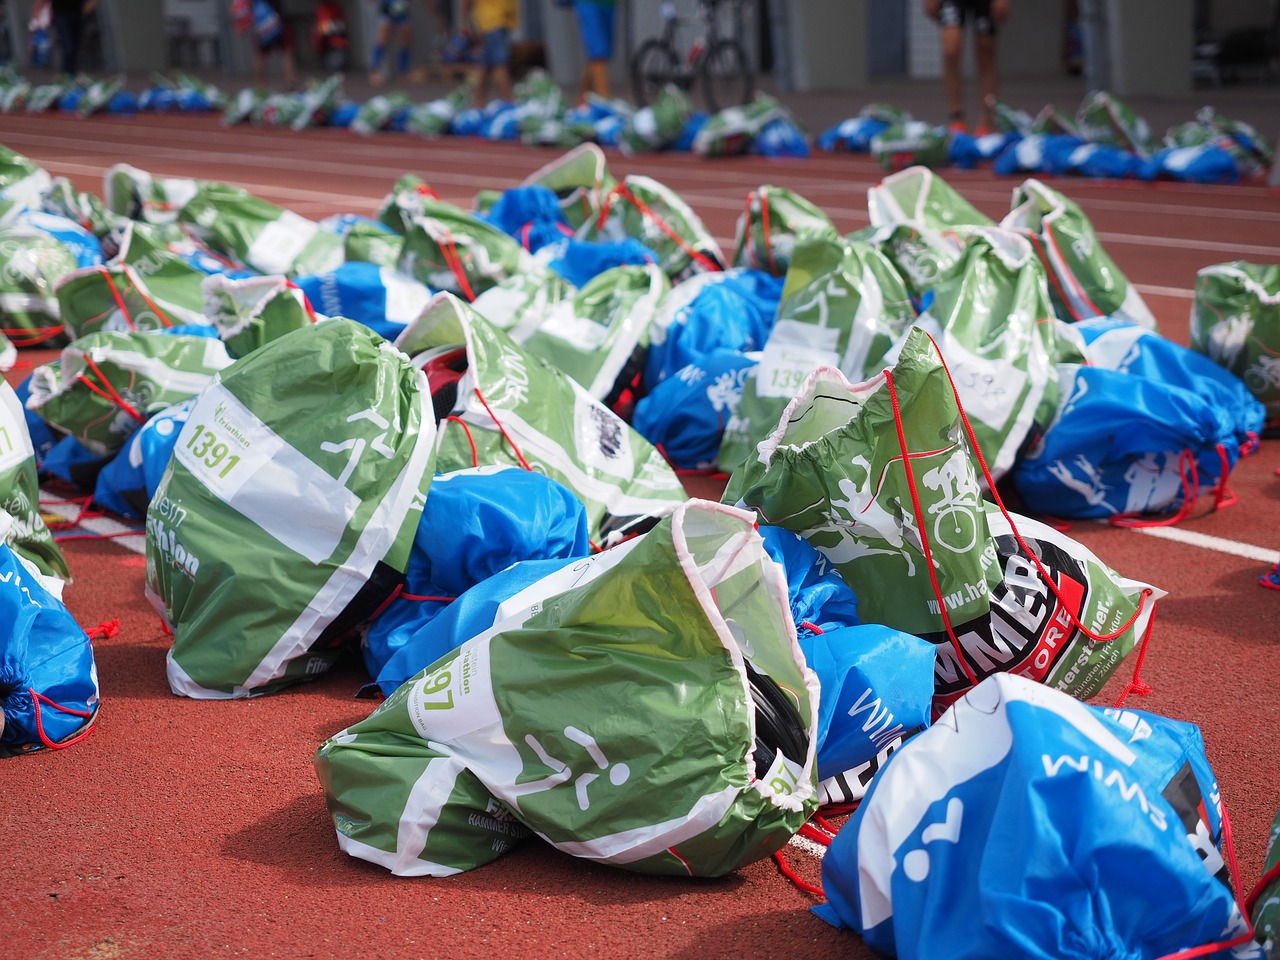 Bags left on the field of the Brett Robinson Triathlon